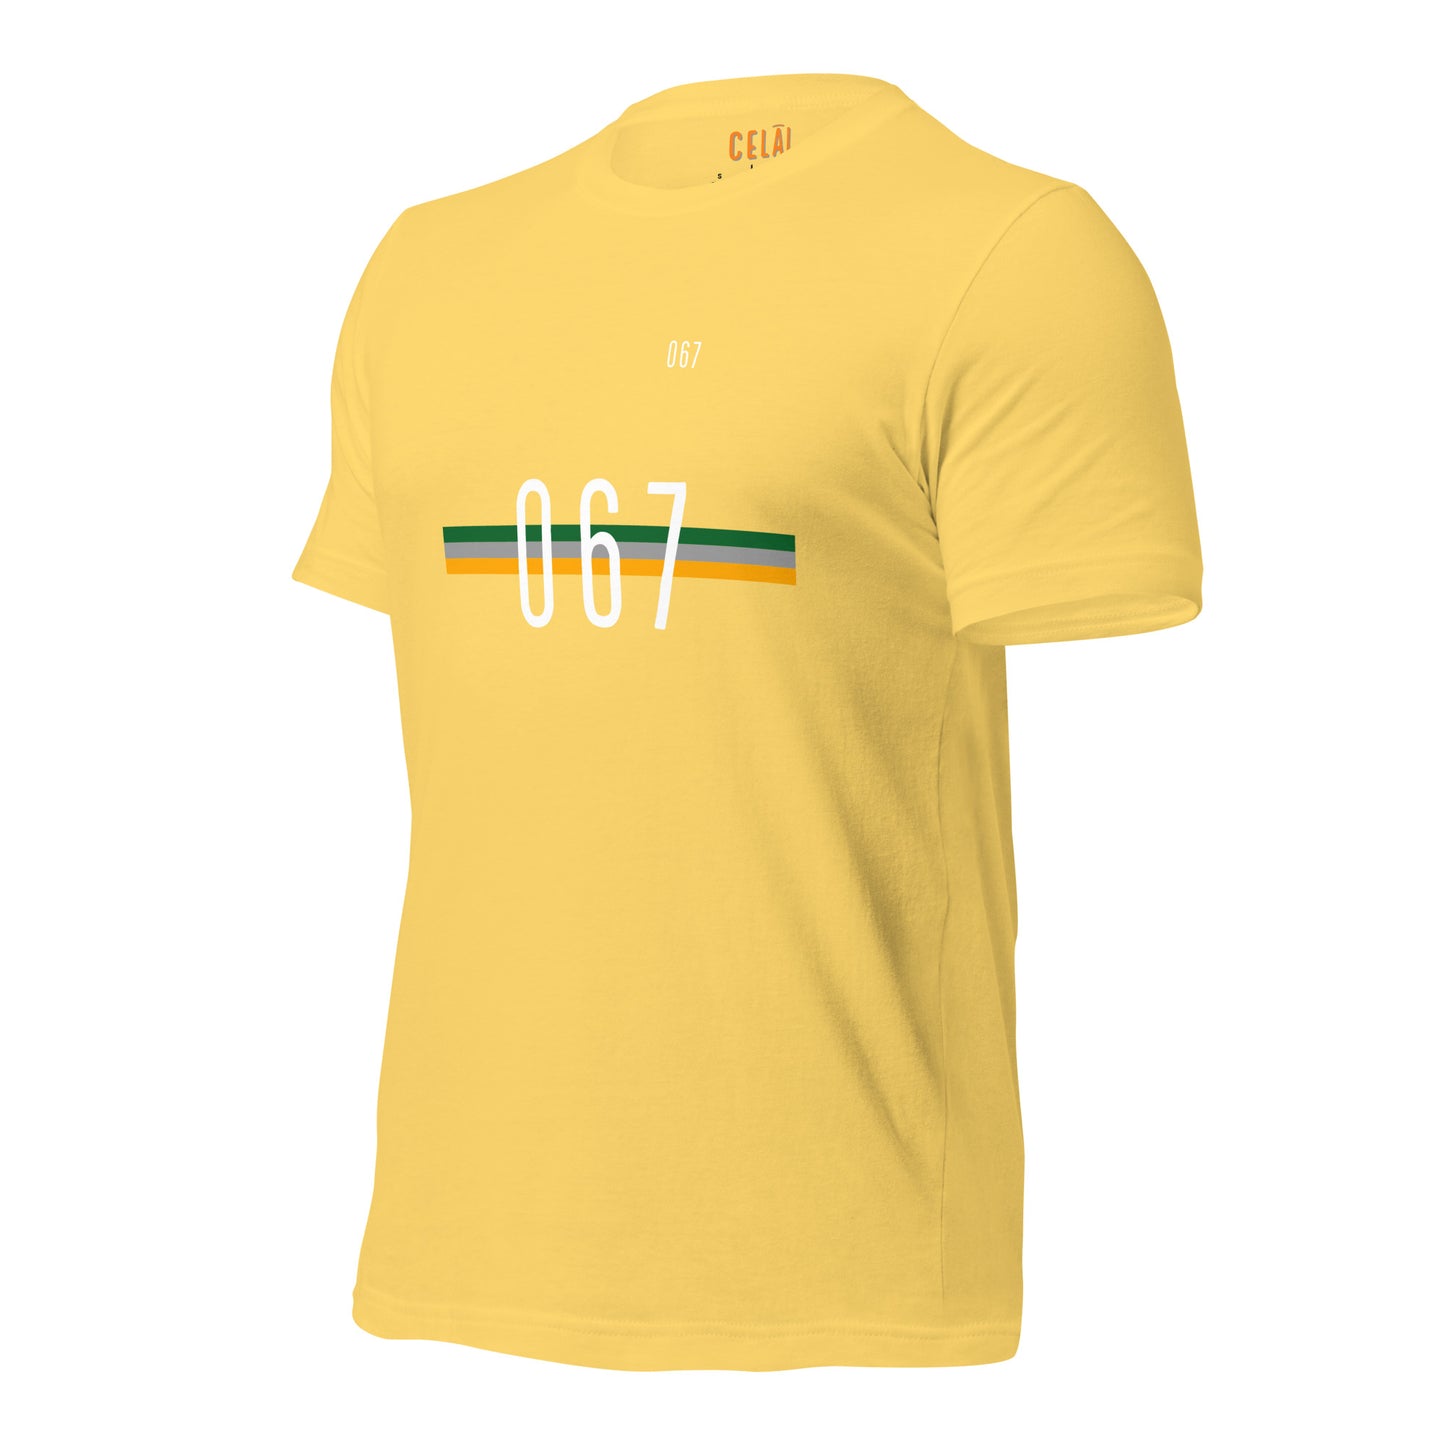 067 Unisex t-shirt